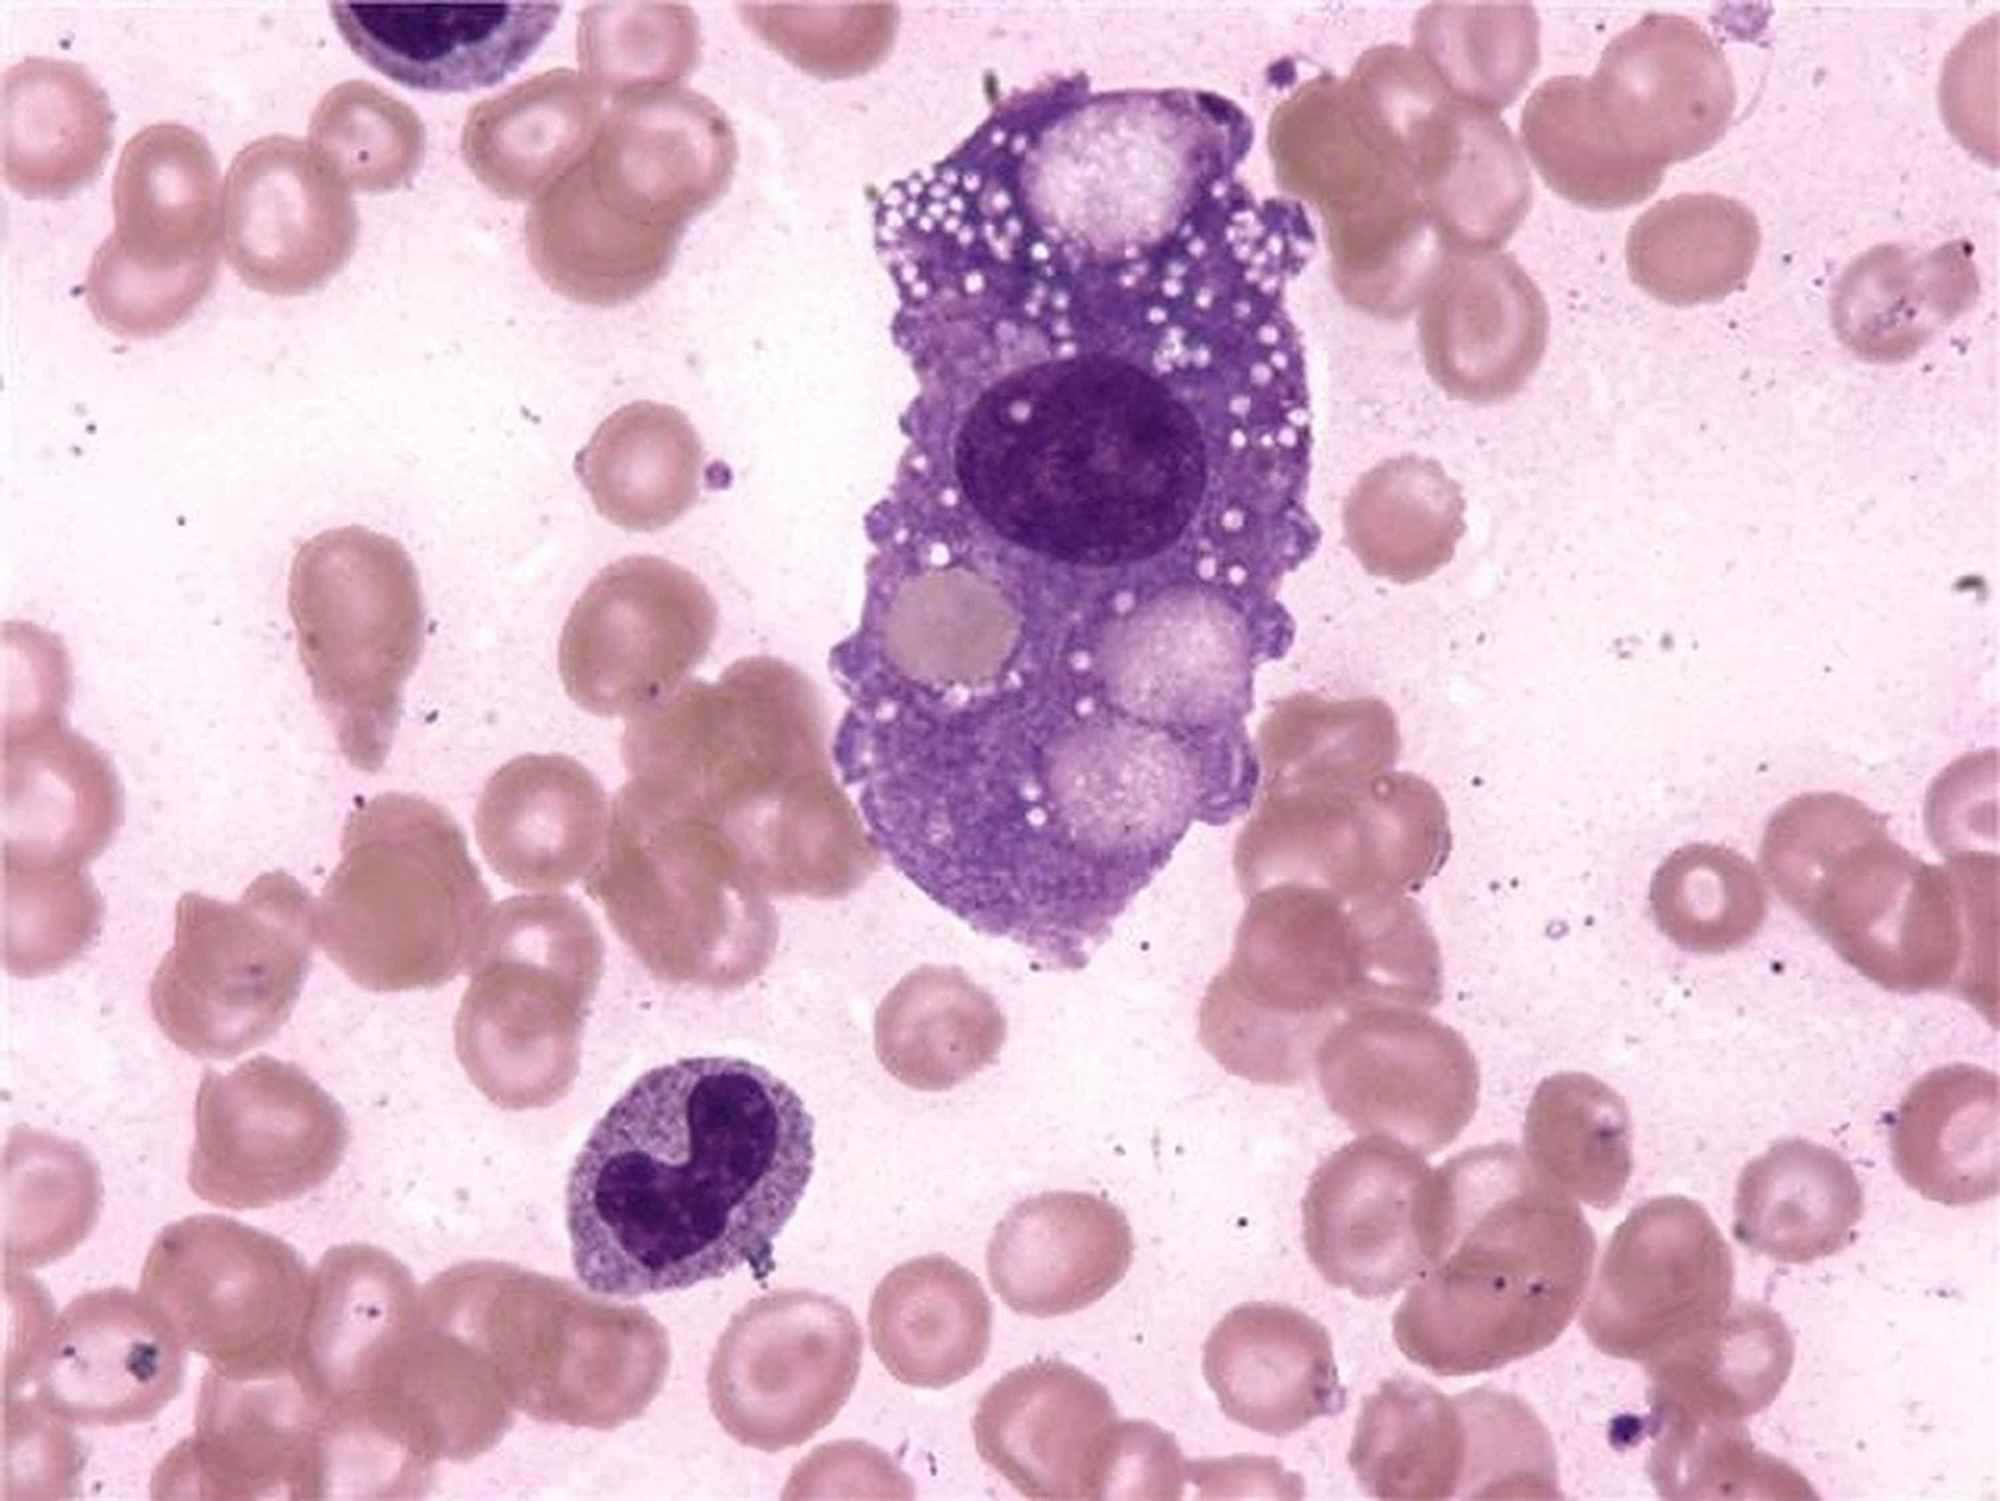 Cureus | Report of a Fatal Case of Hemophagocytic Lymphohistiocytosis